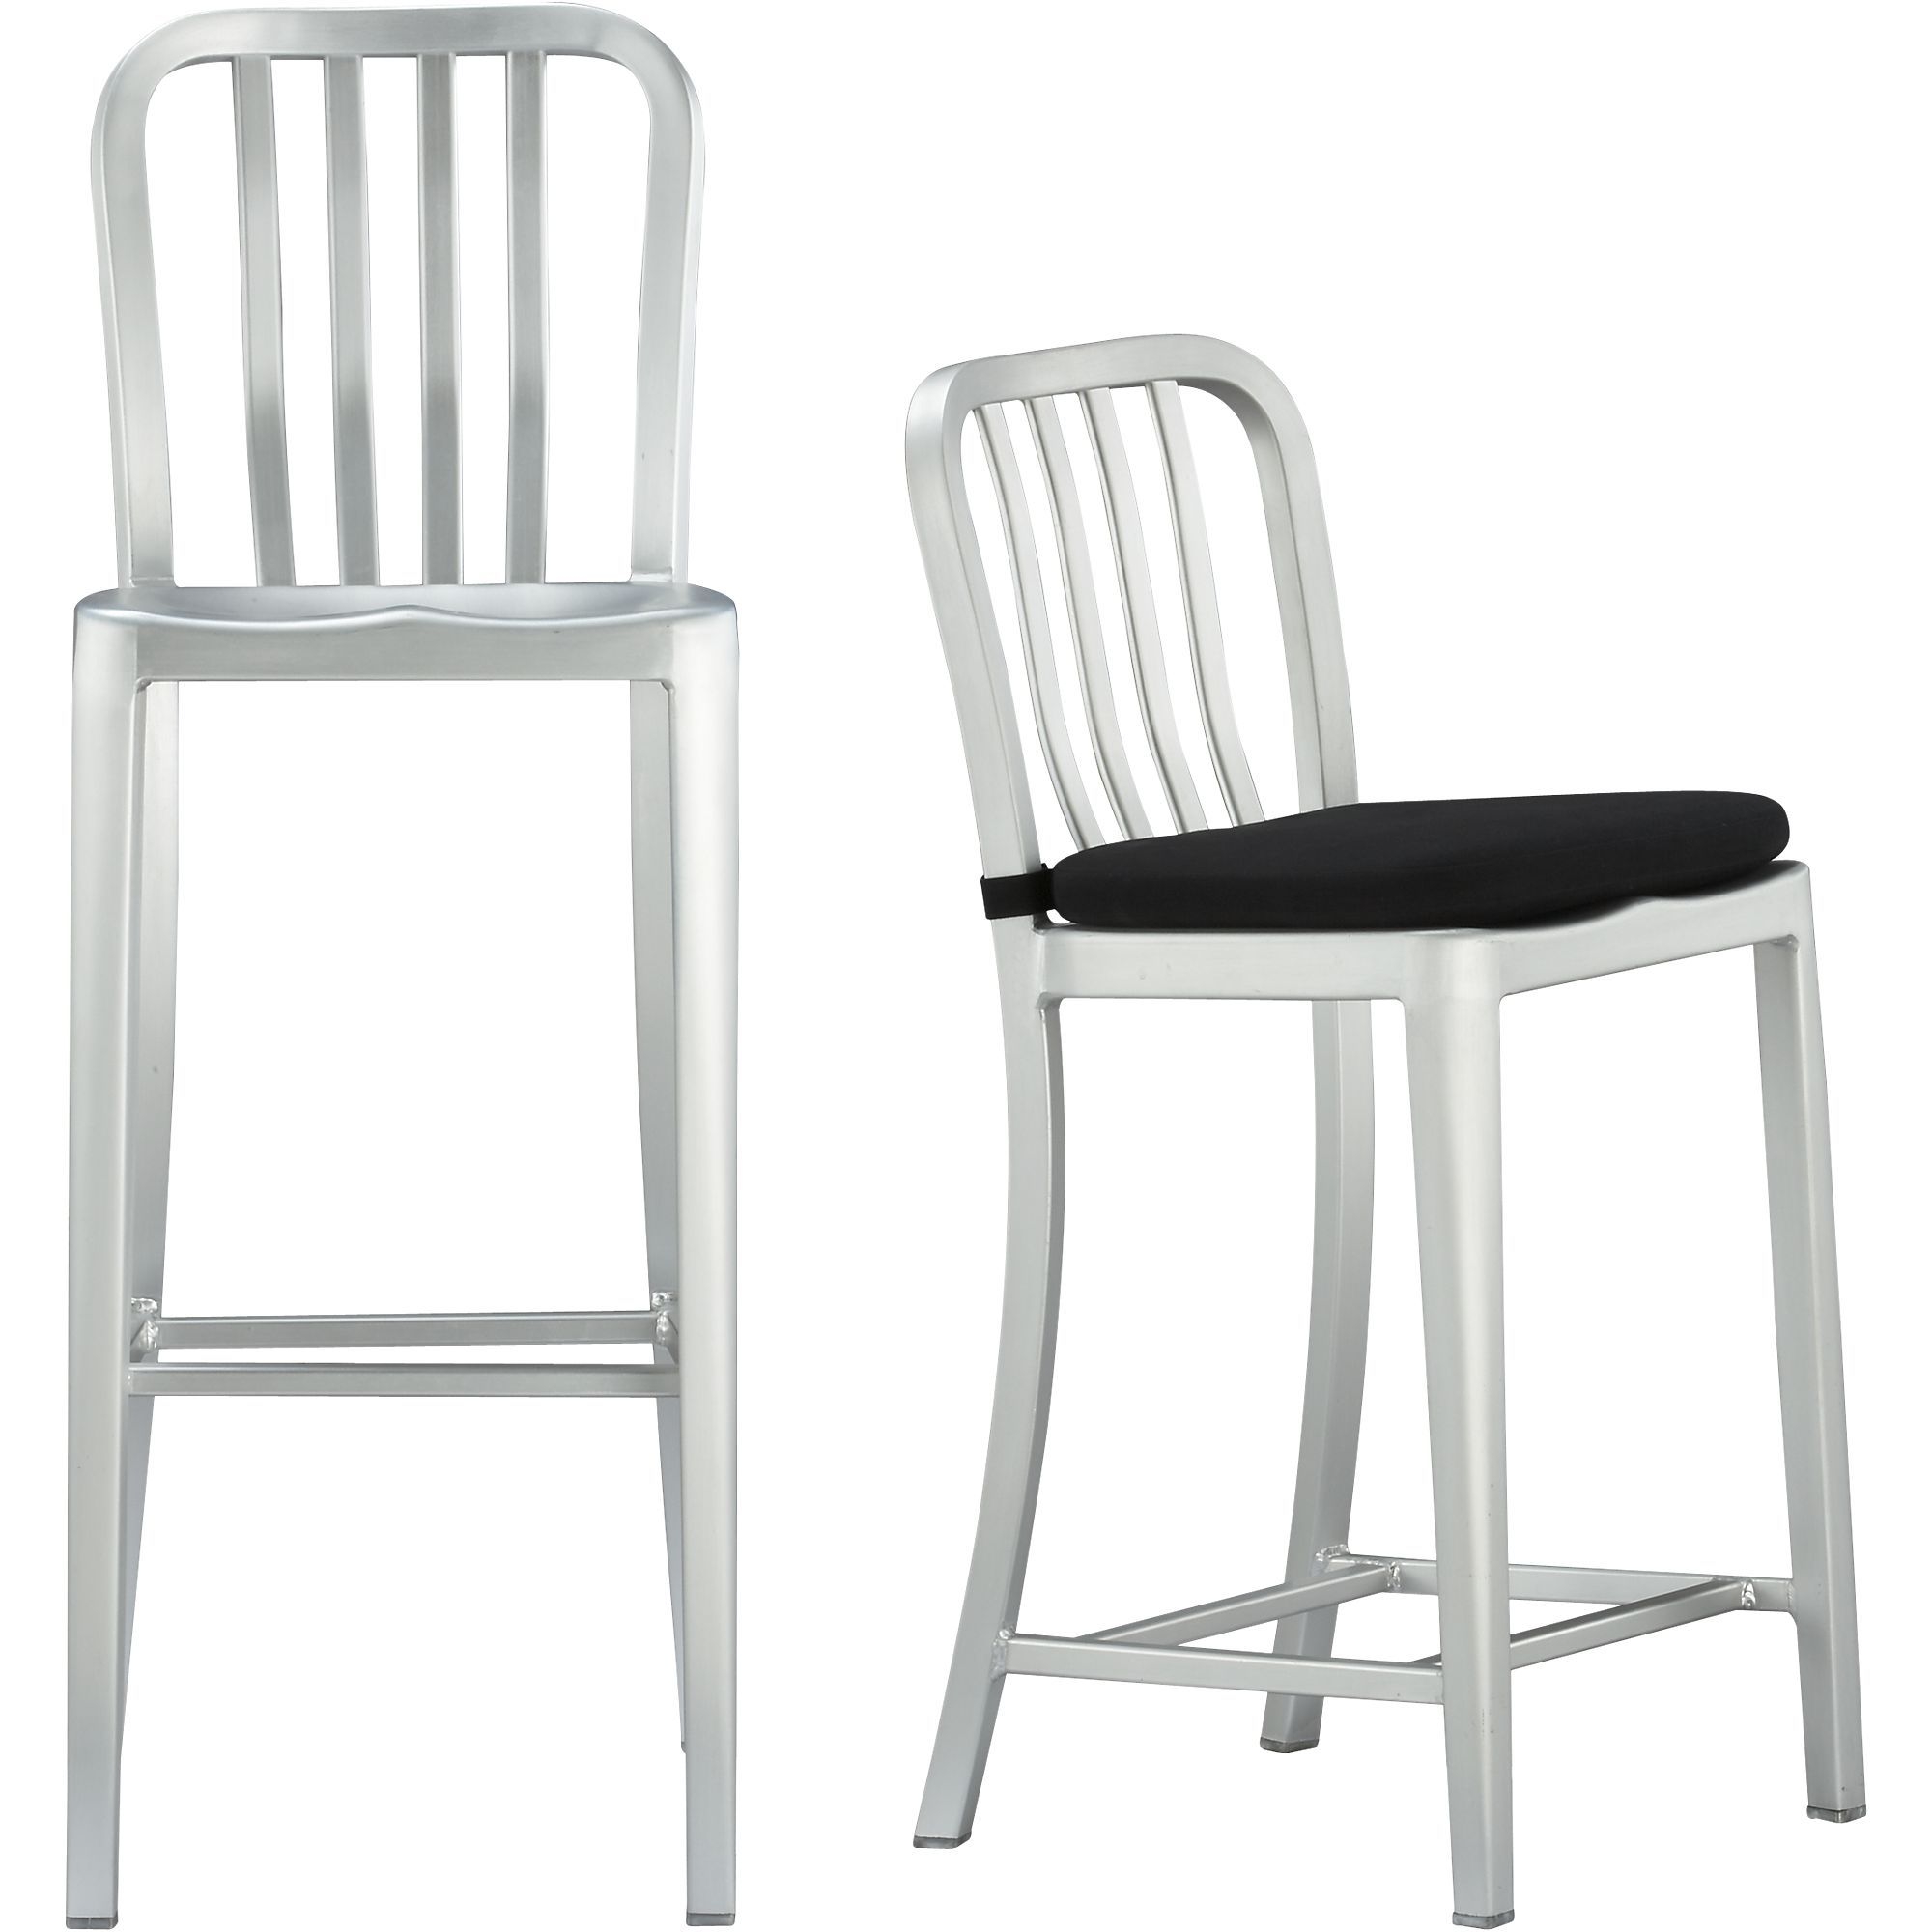 Aluminum bar stools